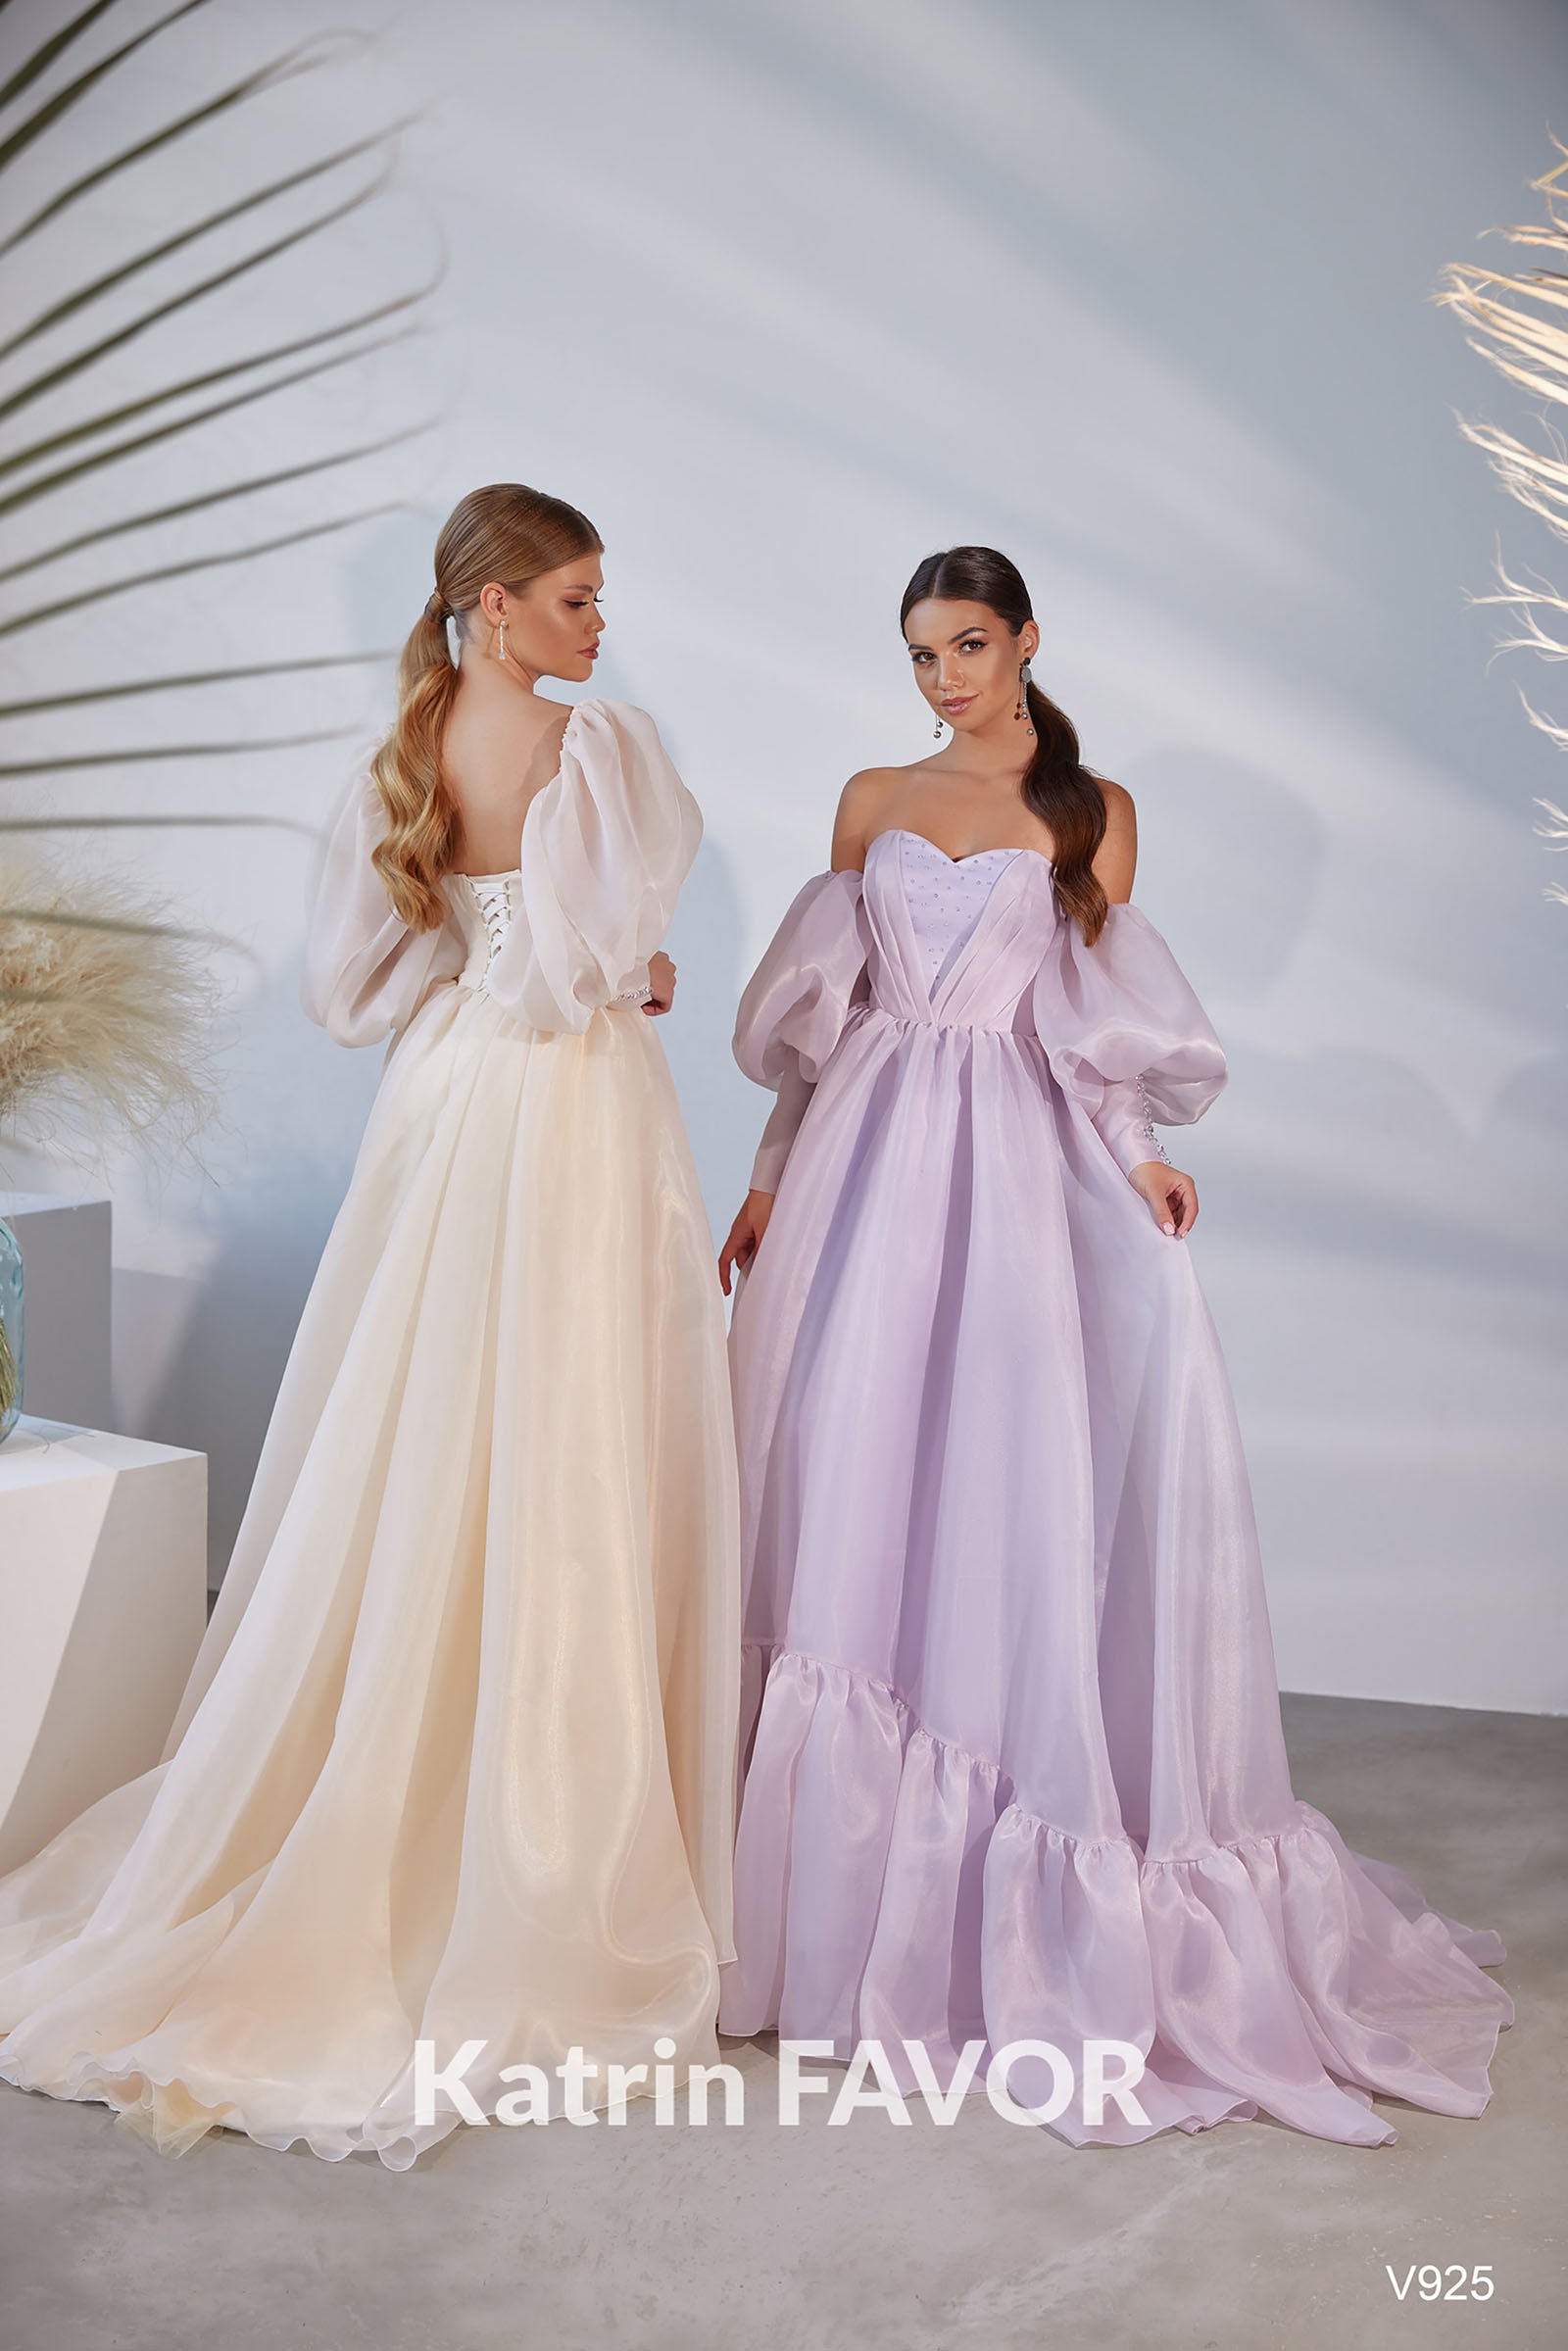 Katrin Favor - Colorful princess A-line wedding dress